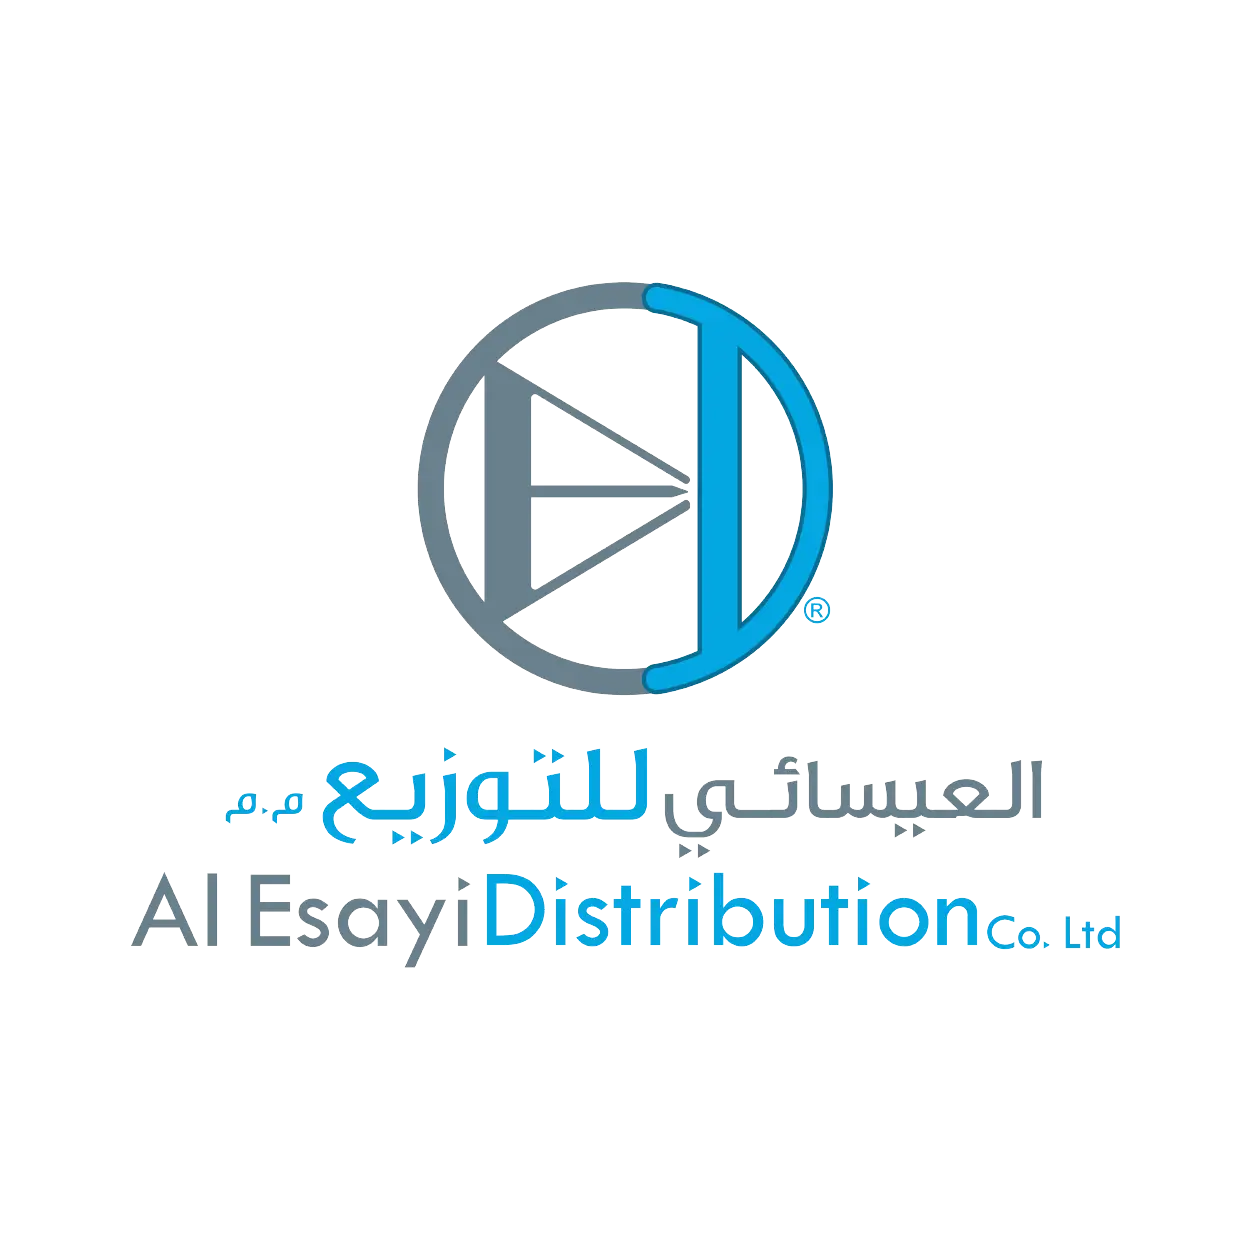 alesayi holding companies alesayi distribution logo